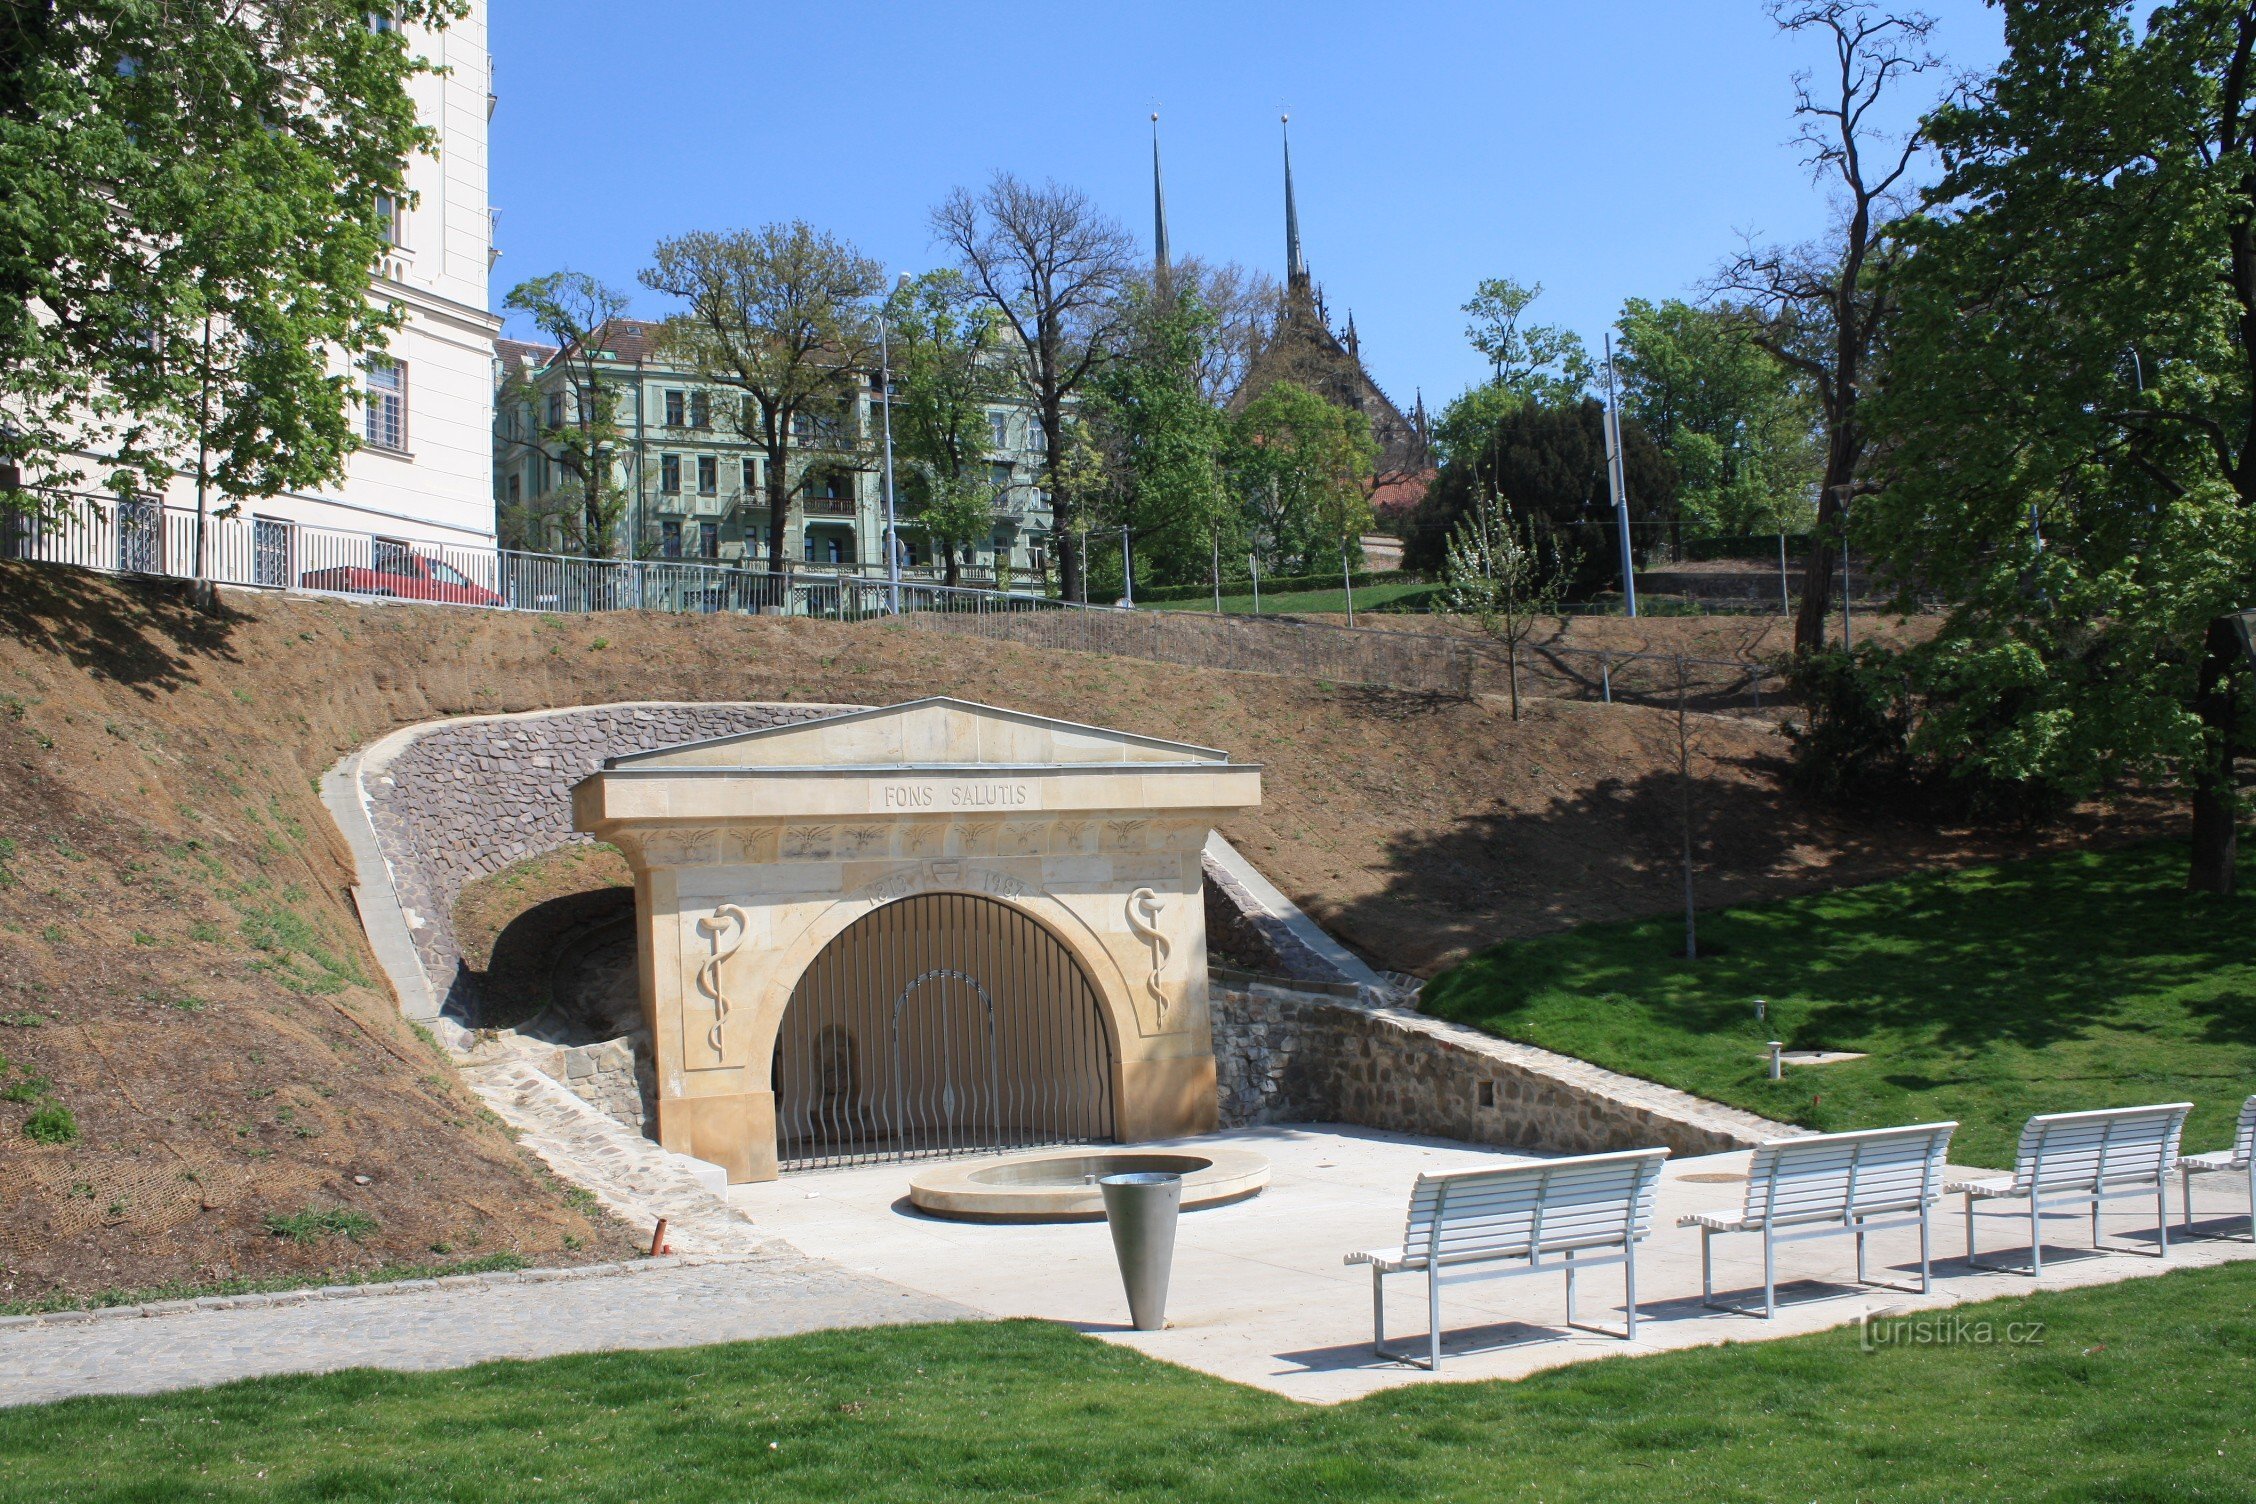 Park Studánka efter revitalisering med Empire-stil objektet Fountain of Health (Fons Salutis)